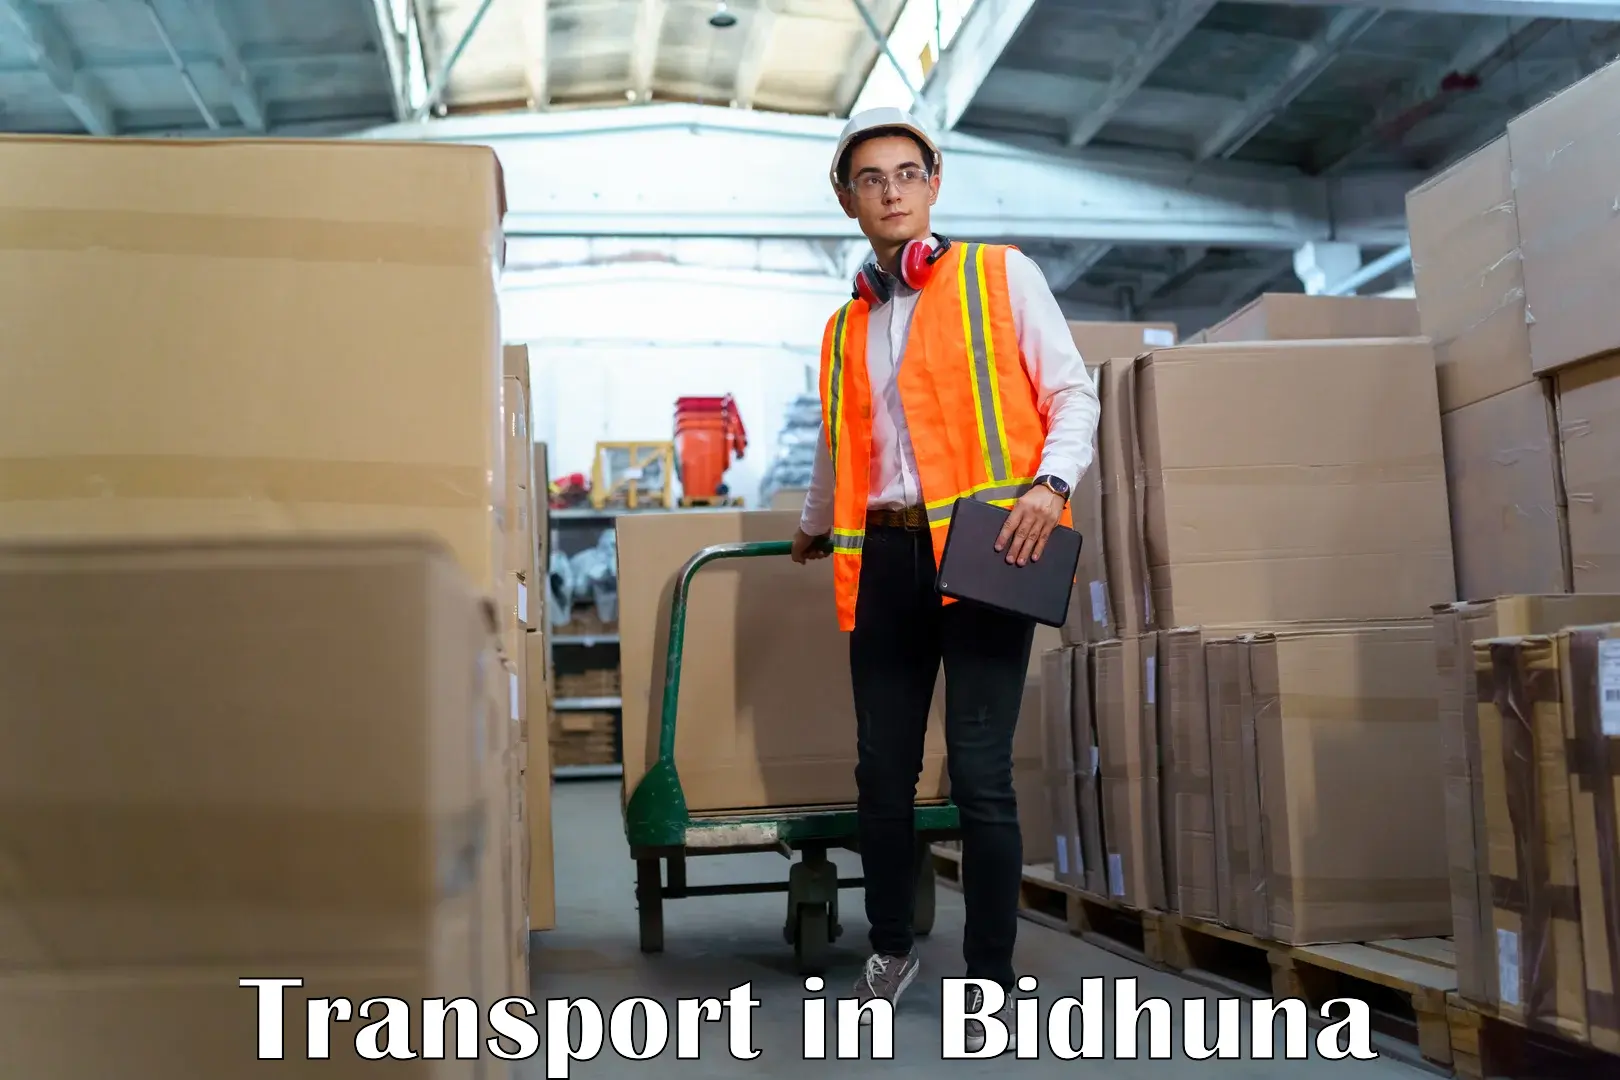 Shipping services in Bidhuna